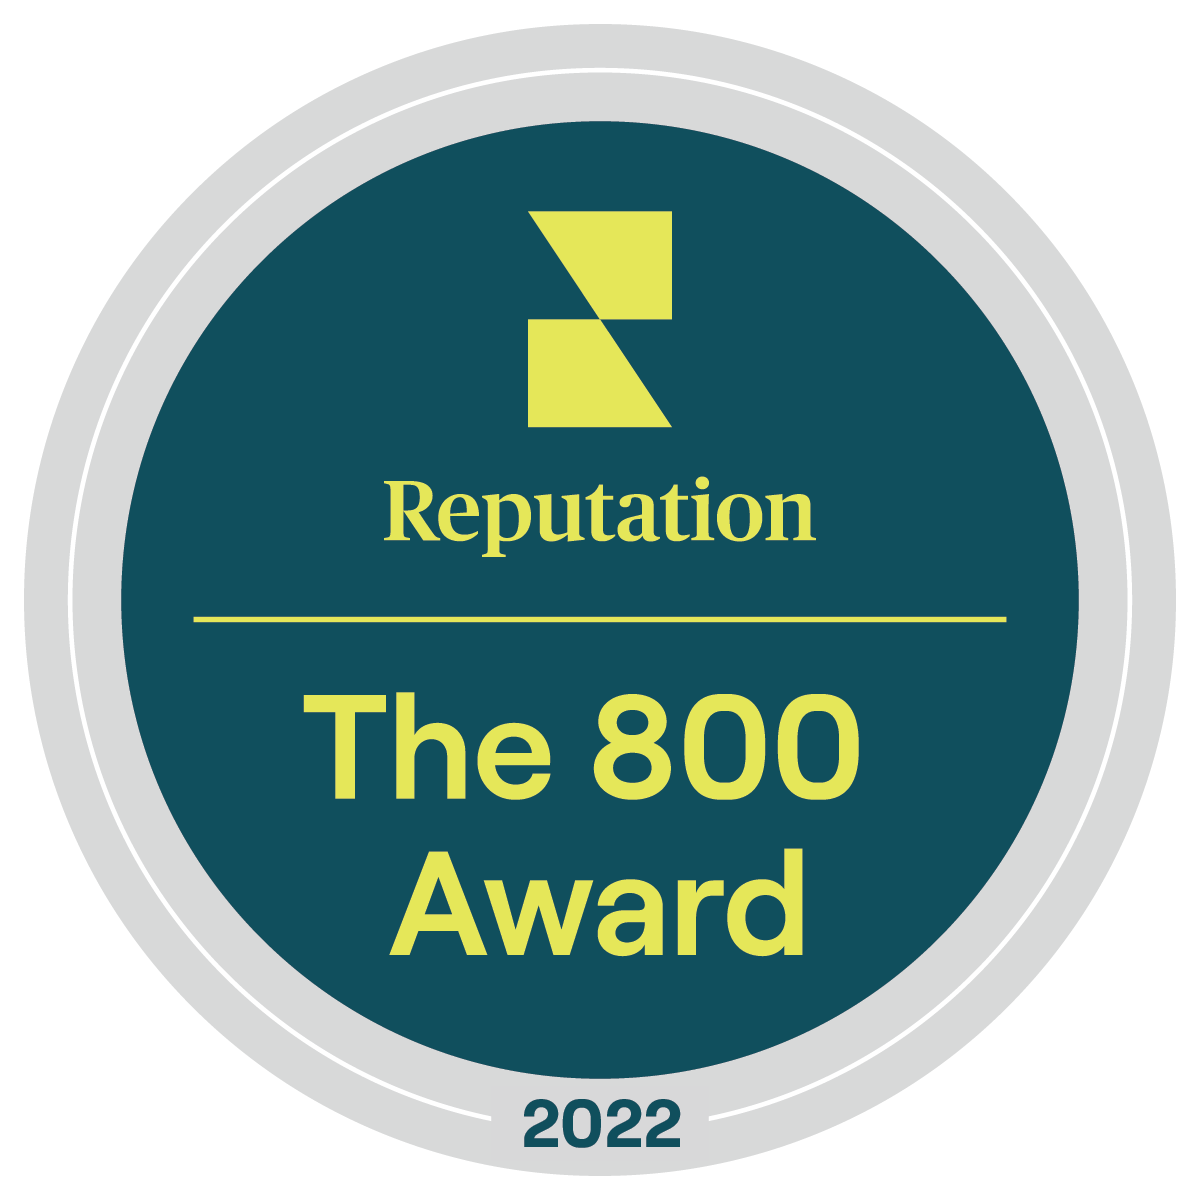 Awarded the Reputation.com 800 Award